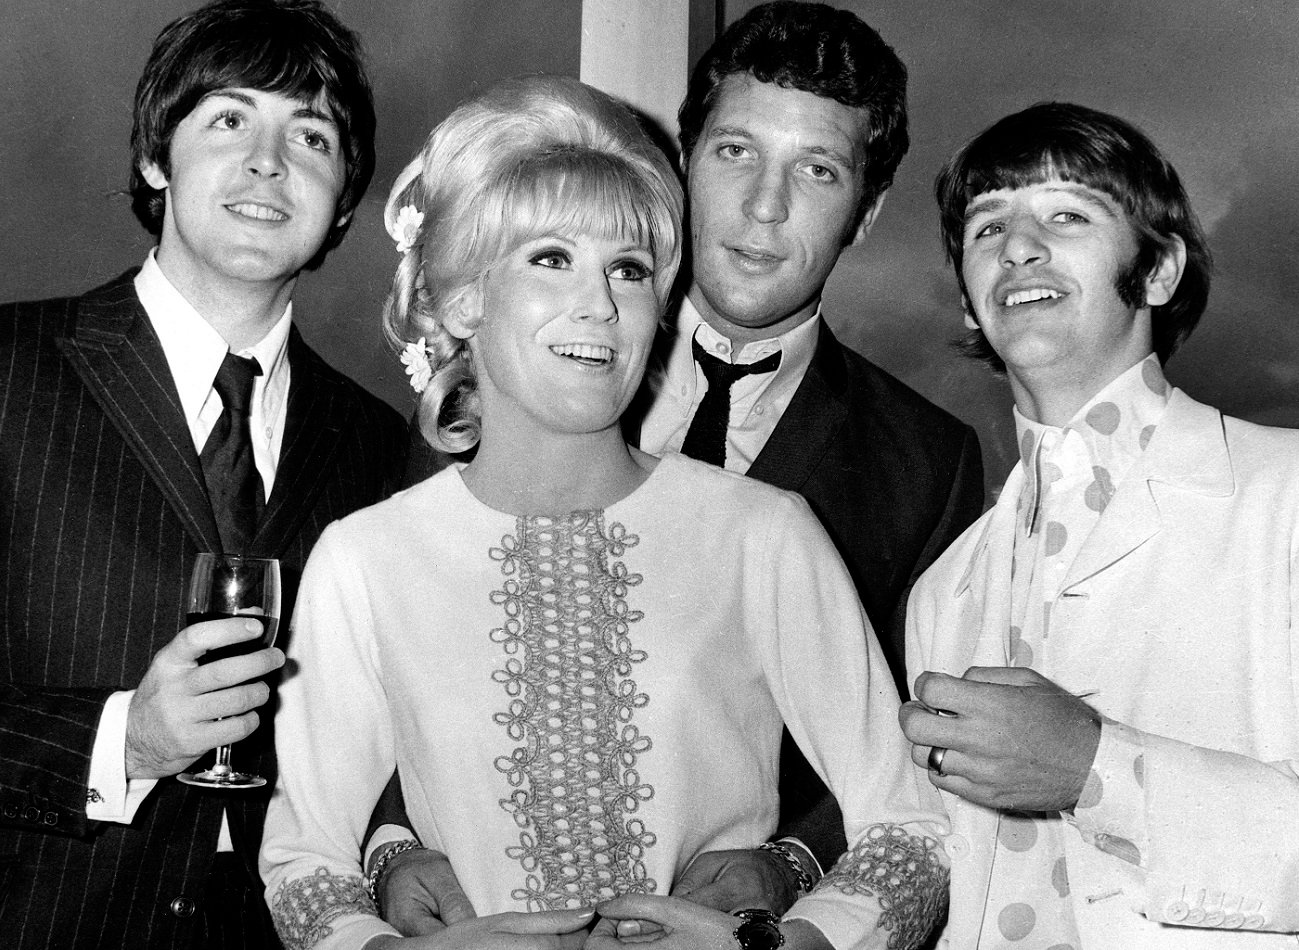  Paul McCartney, Dusty Springfield, Tom Jones, and Ringo Starr posed at Melody Maker Awards, 1966